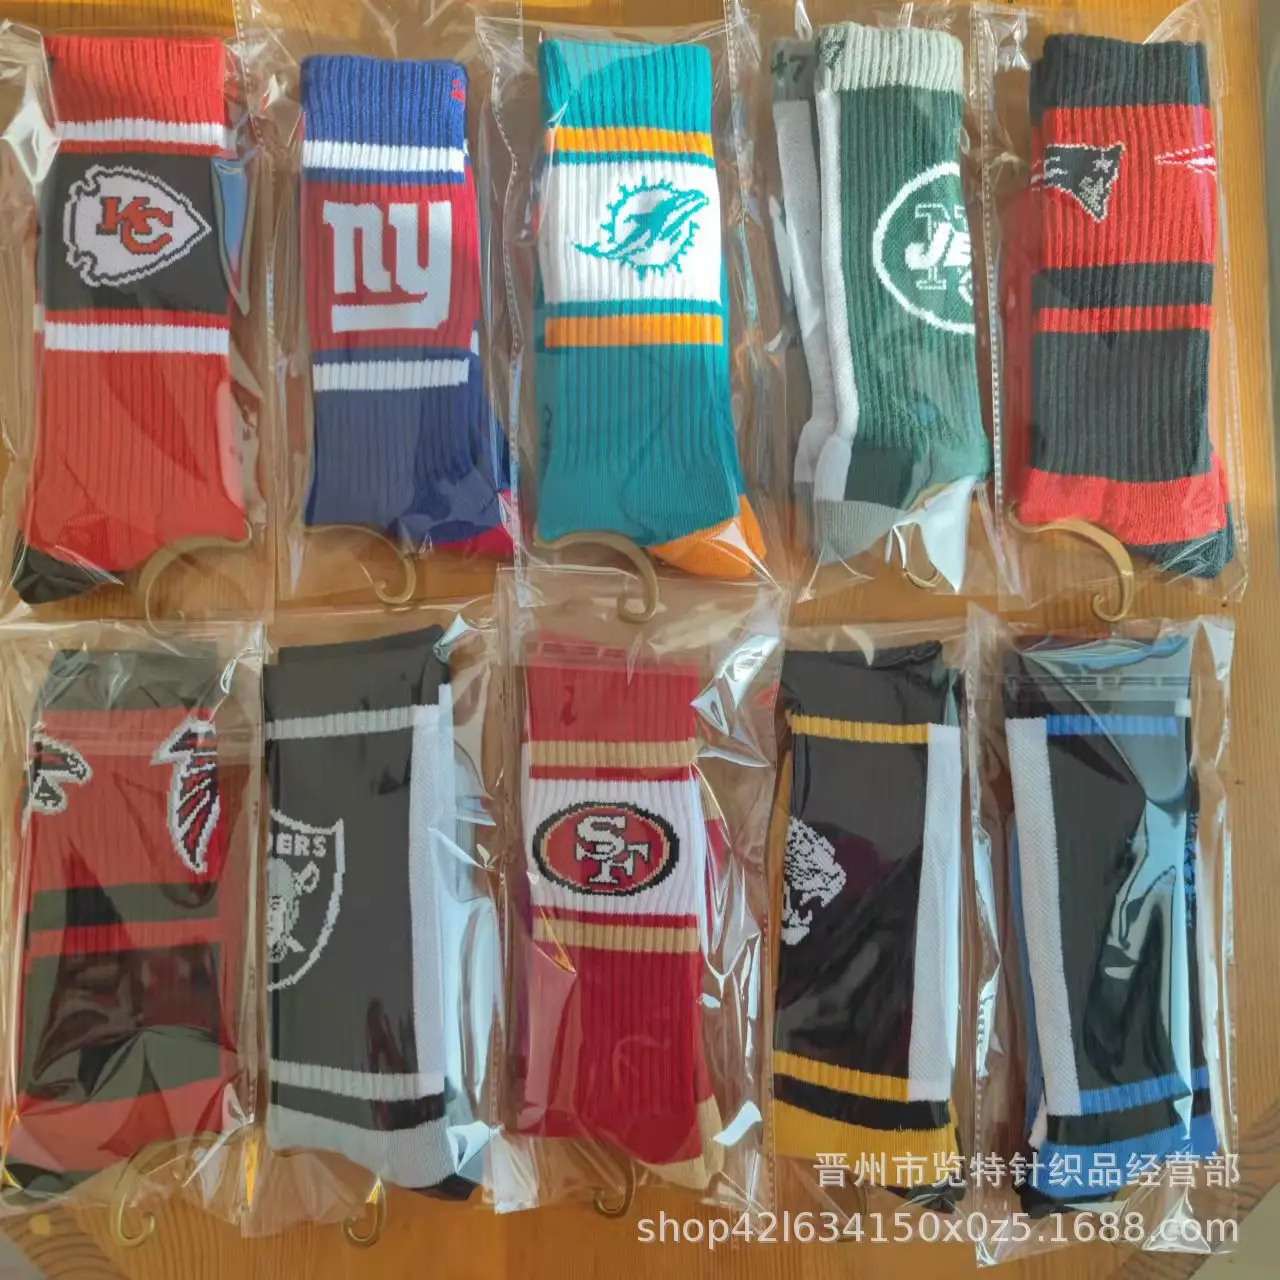 Wholesale Sports Training Socks Long Cotton Embroidery Popular American basketball Football Grip Socks